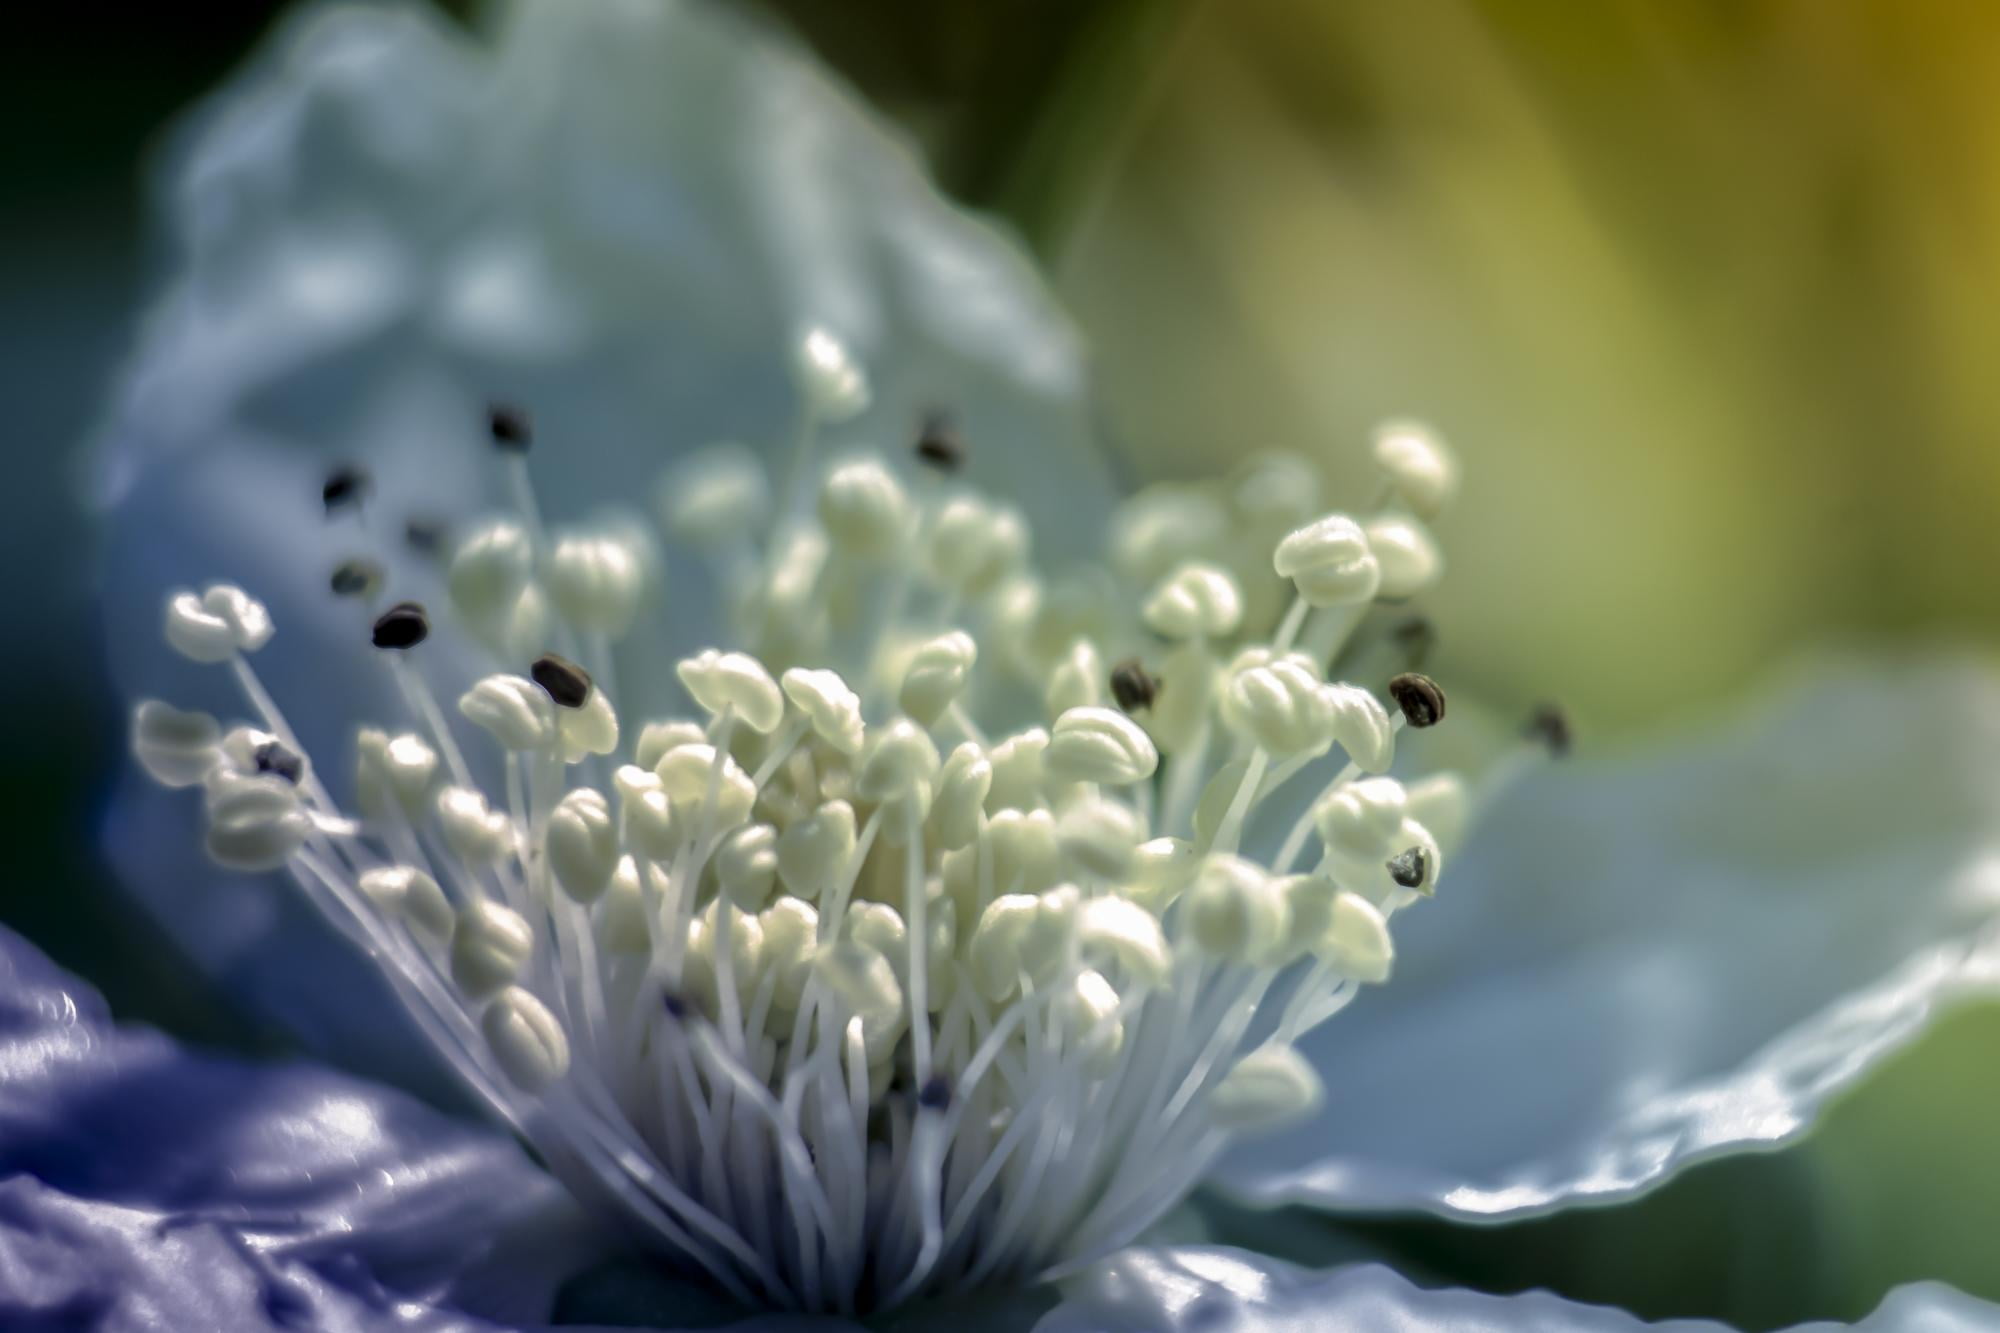 closeup photo of pistil flower